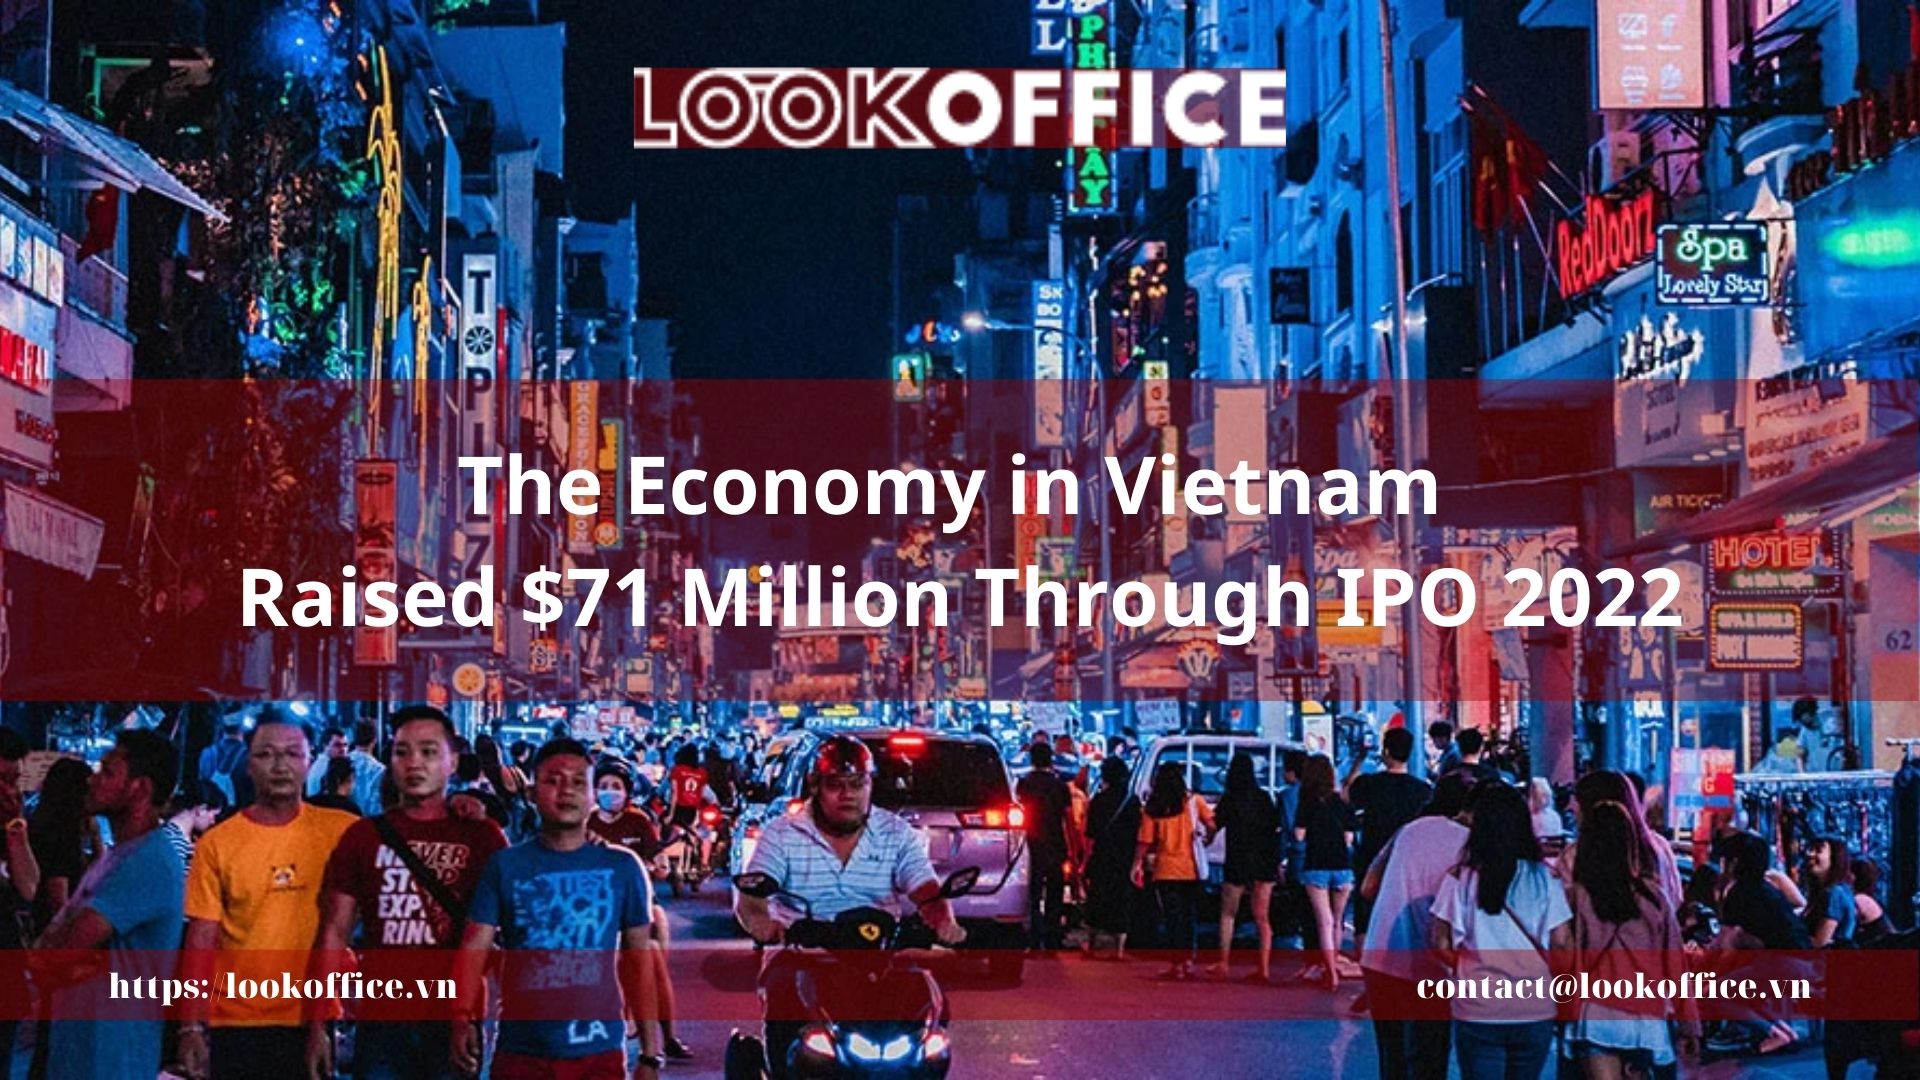 The Economy in Vietnam Raised $71 Million Through IPO